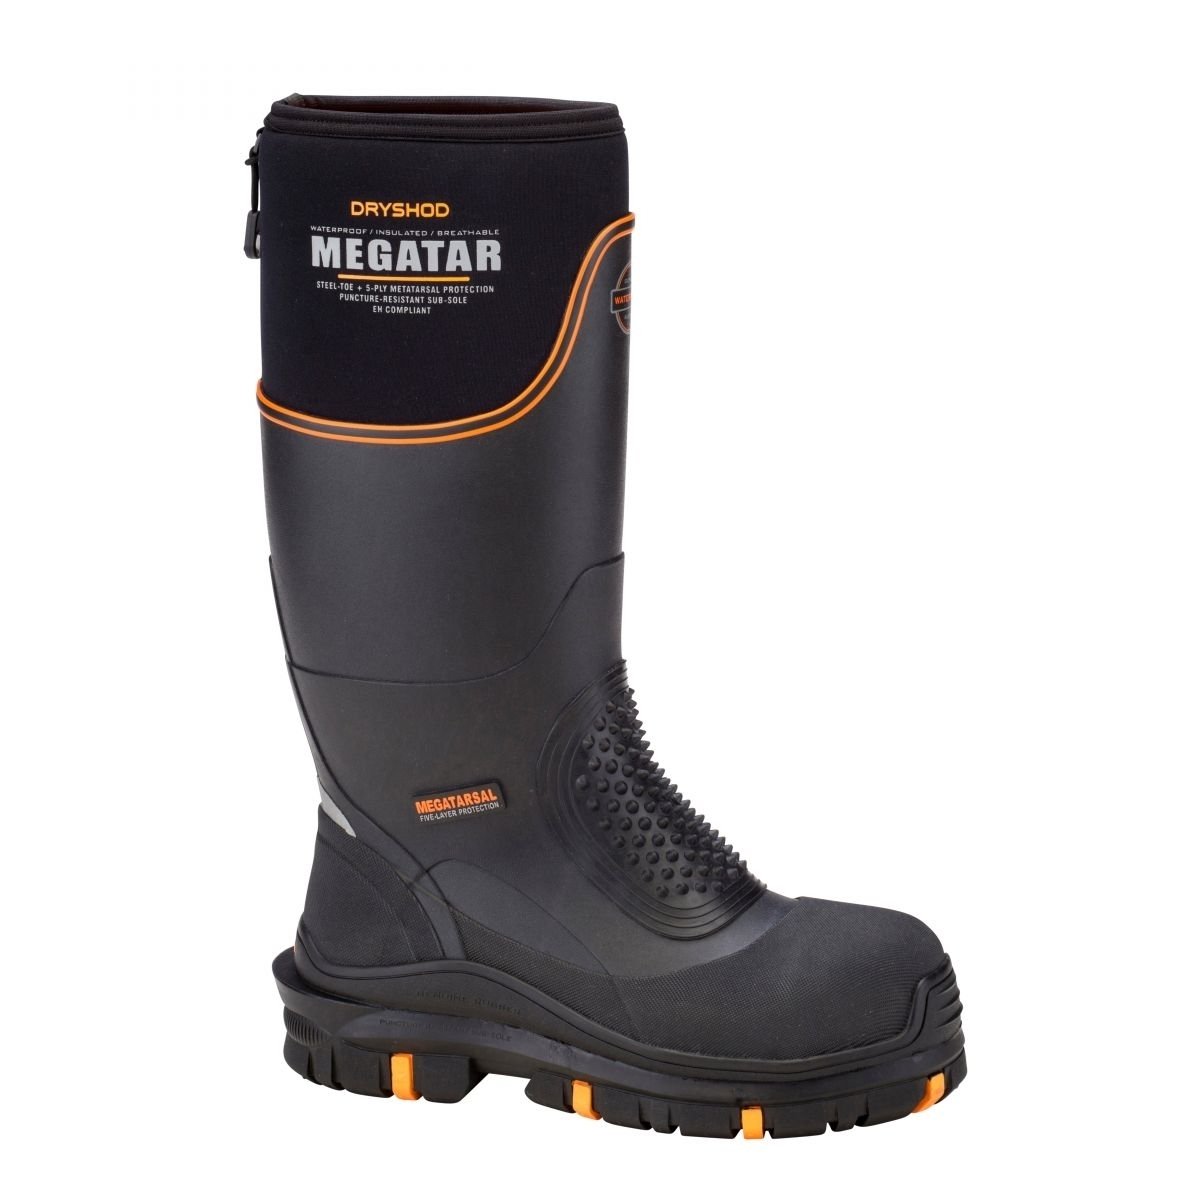 Dryshod Men's Megatar Steel Toe Metatarsal Guard Work Boot Black - MEG-MH-BK ONE SIZE BLACK/ORANGE - BLACK/ORANGE, 9